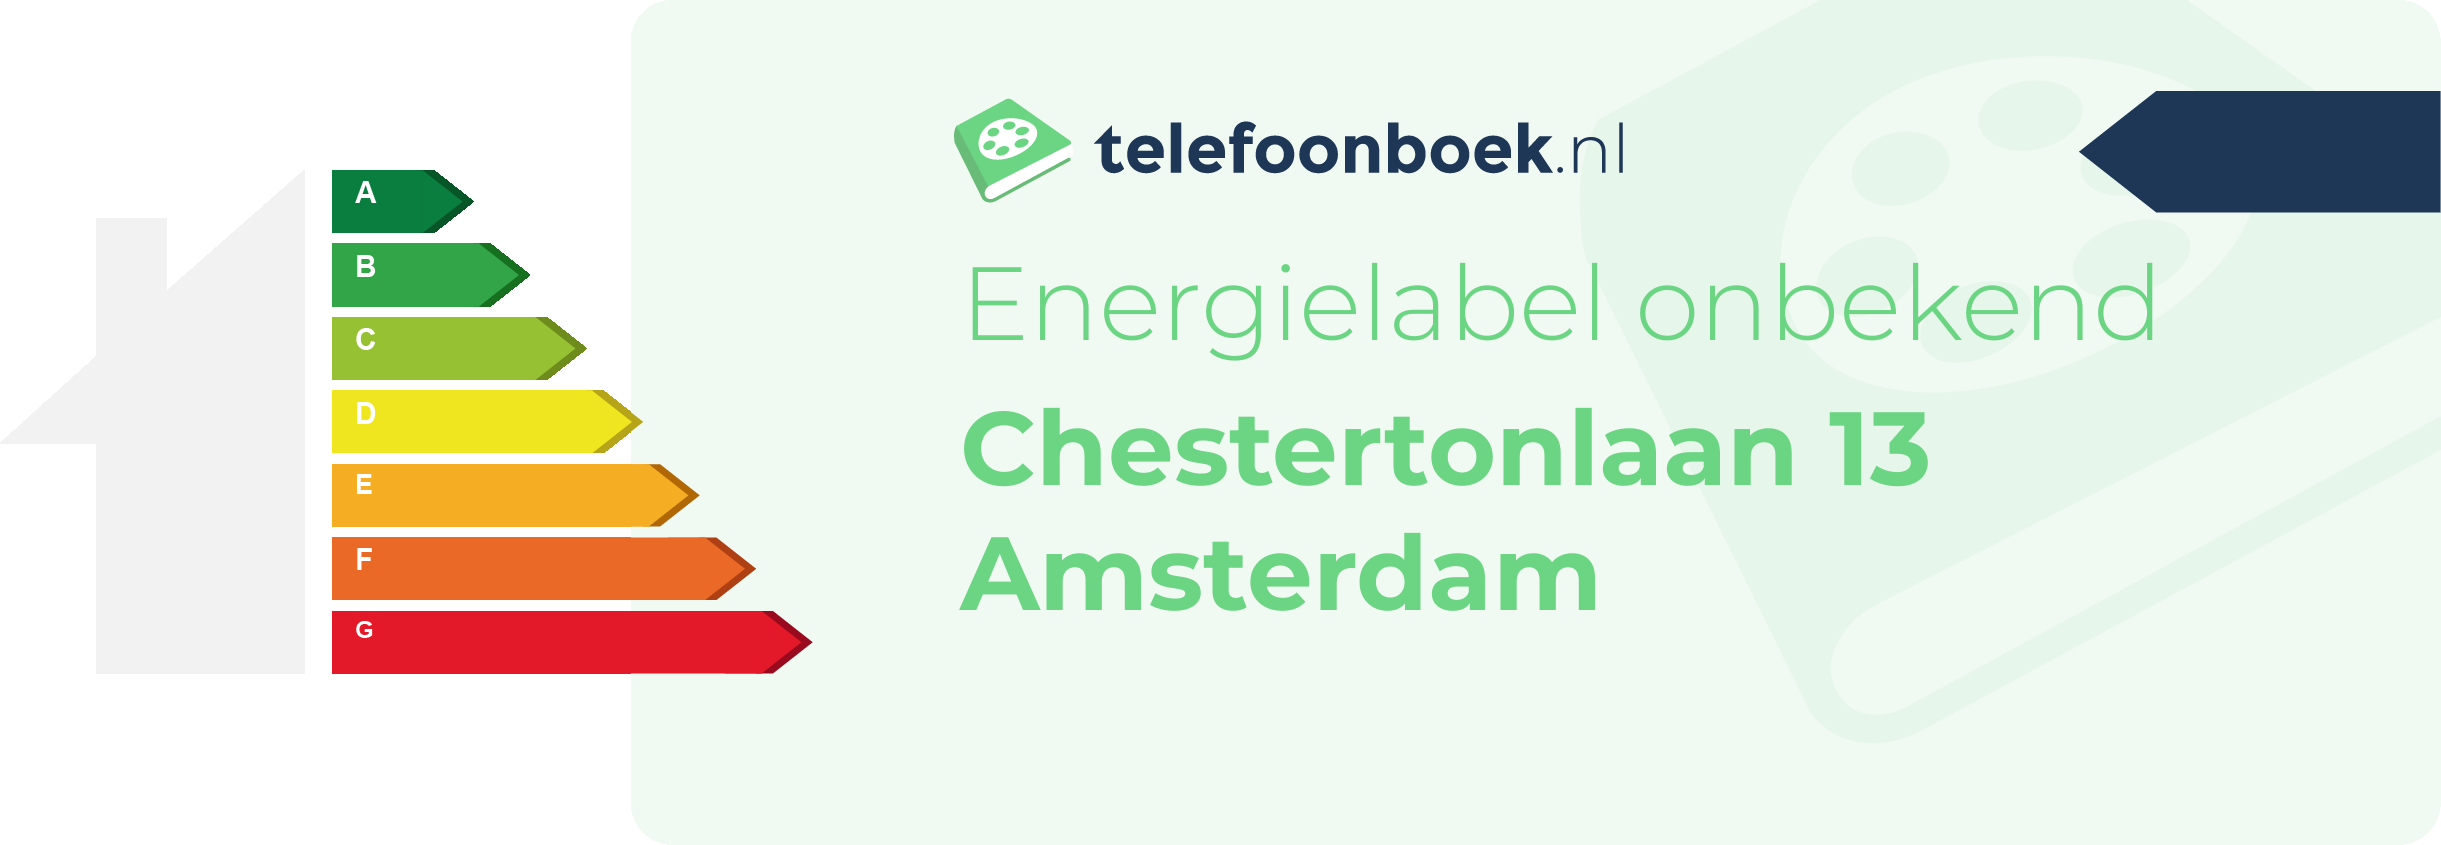 Energielabel Chestertonlaan 13 Amsterdam